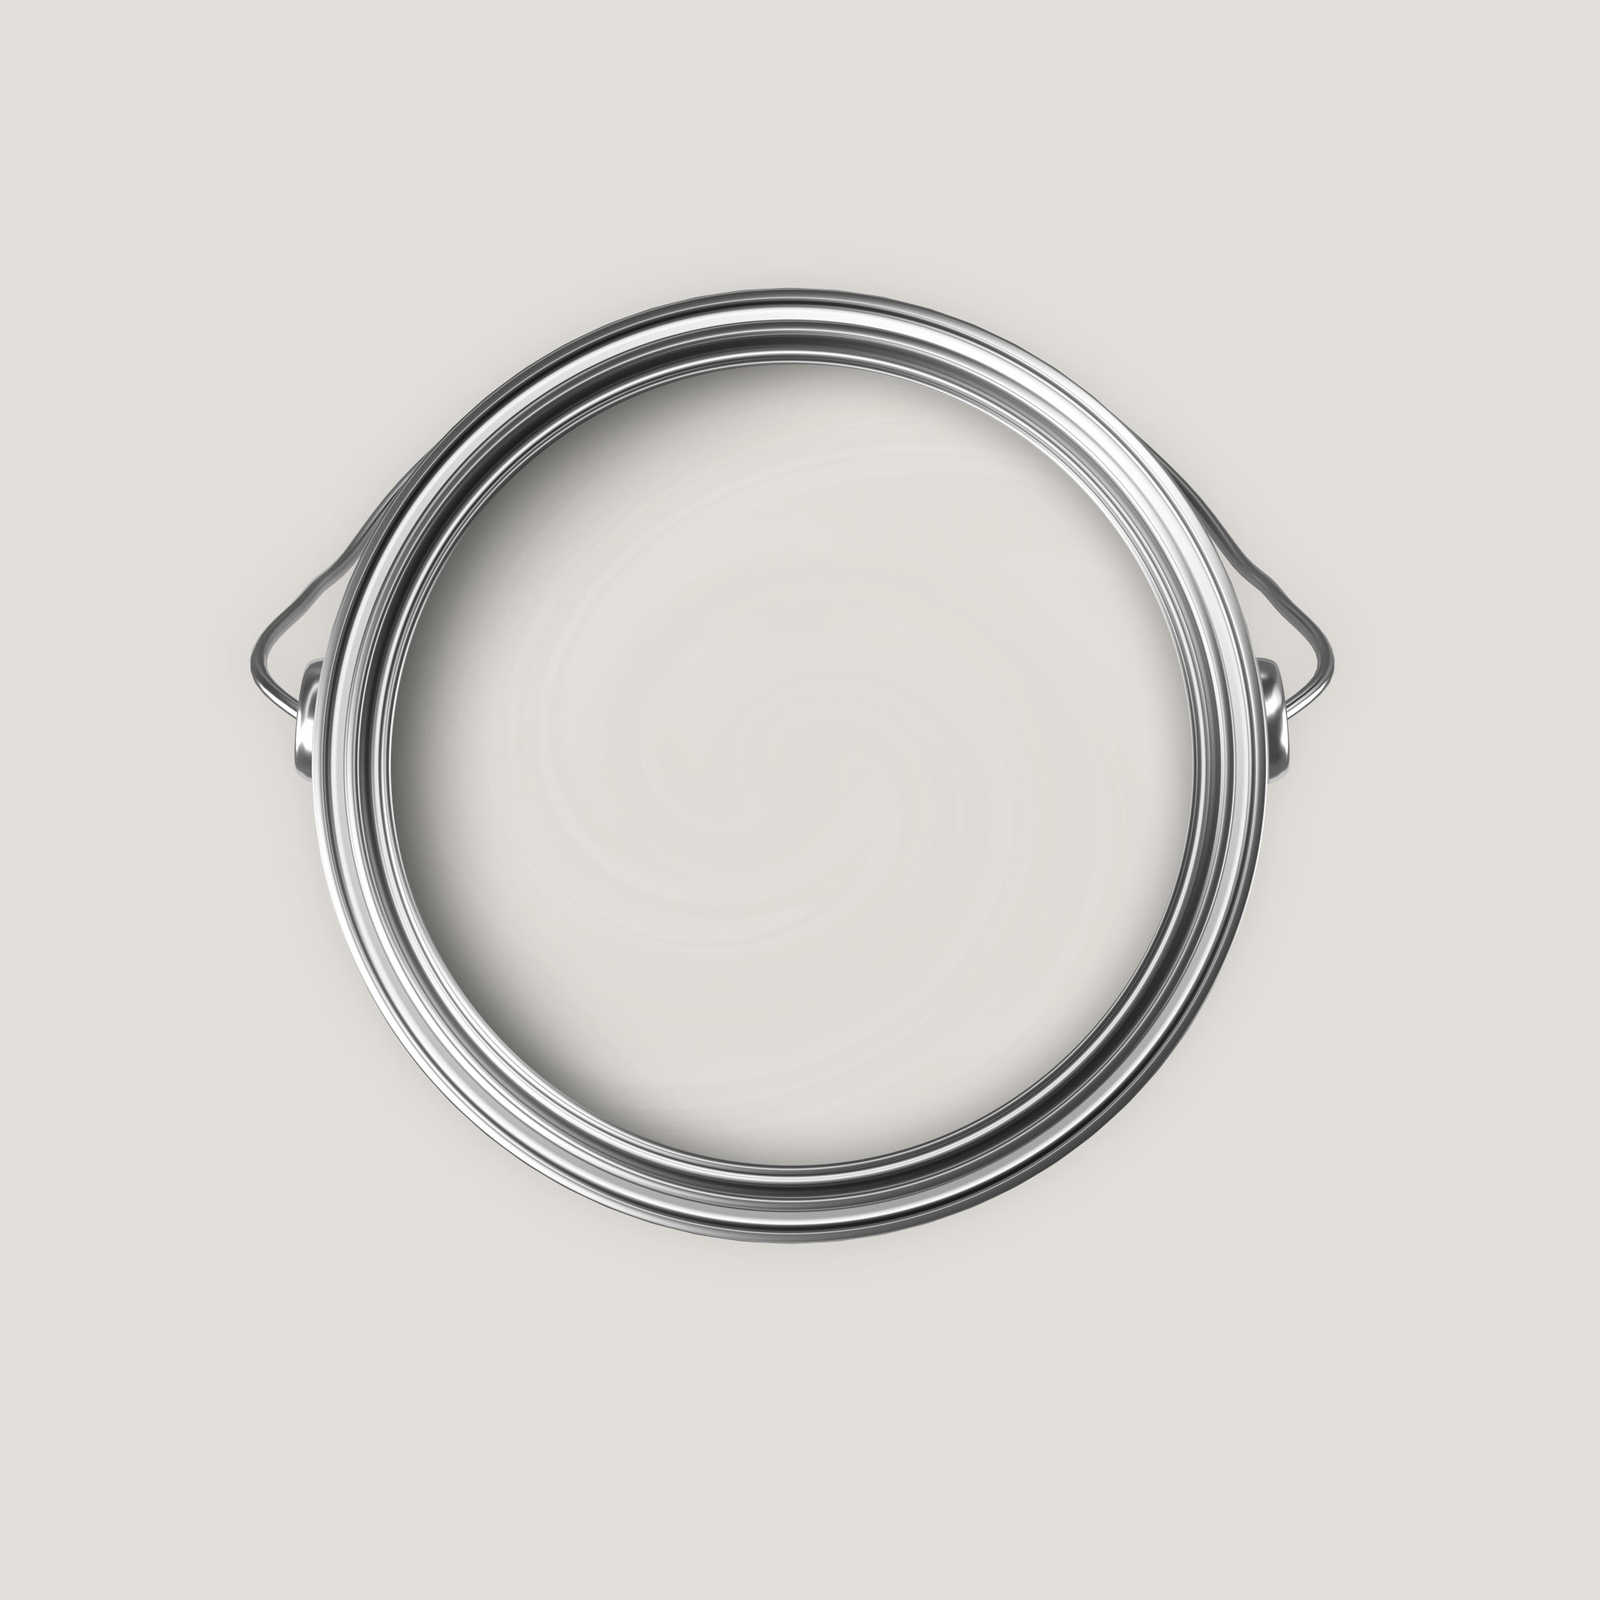             Pintura mural Premium gris claro atemporal »Creamy Grey« NW108 – 5 litro
        